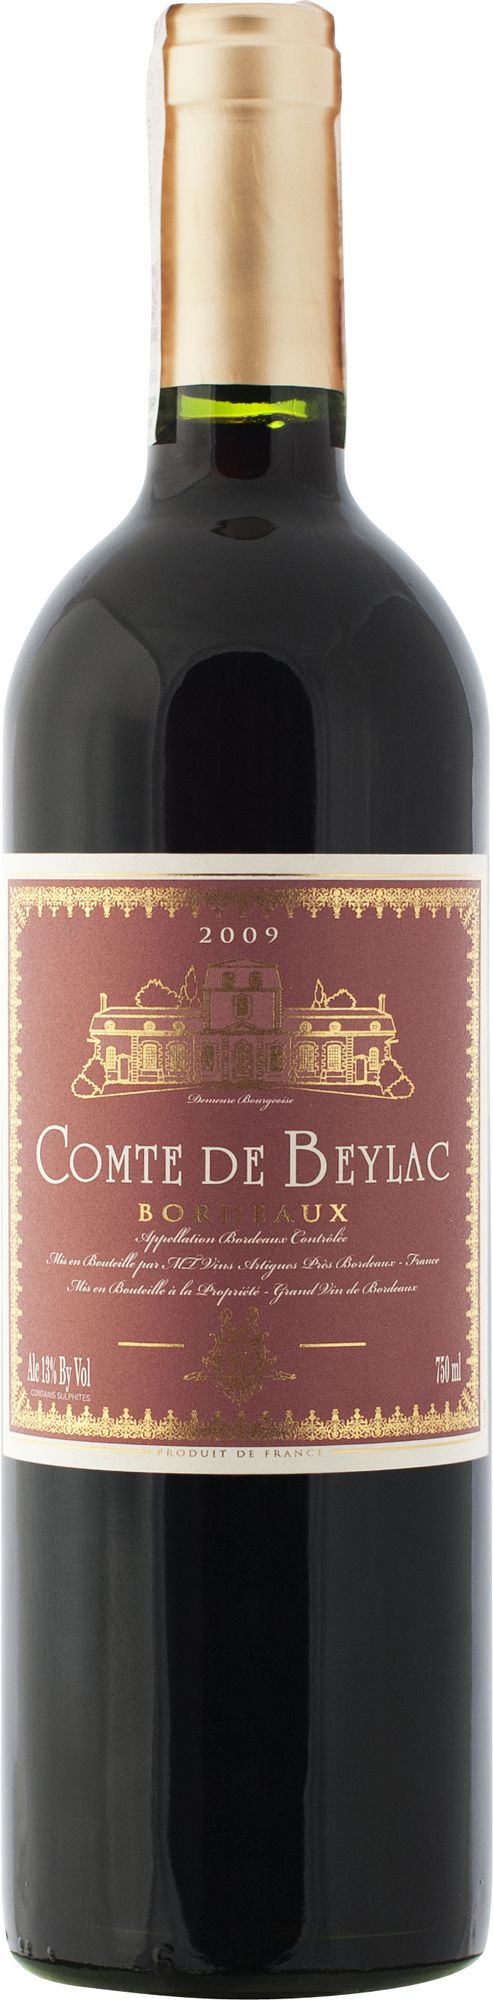 Wino Comte de Beylac Bordeaux AC